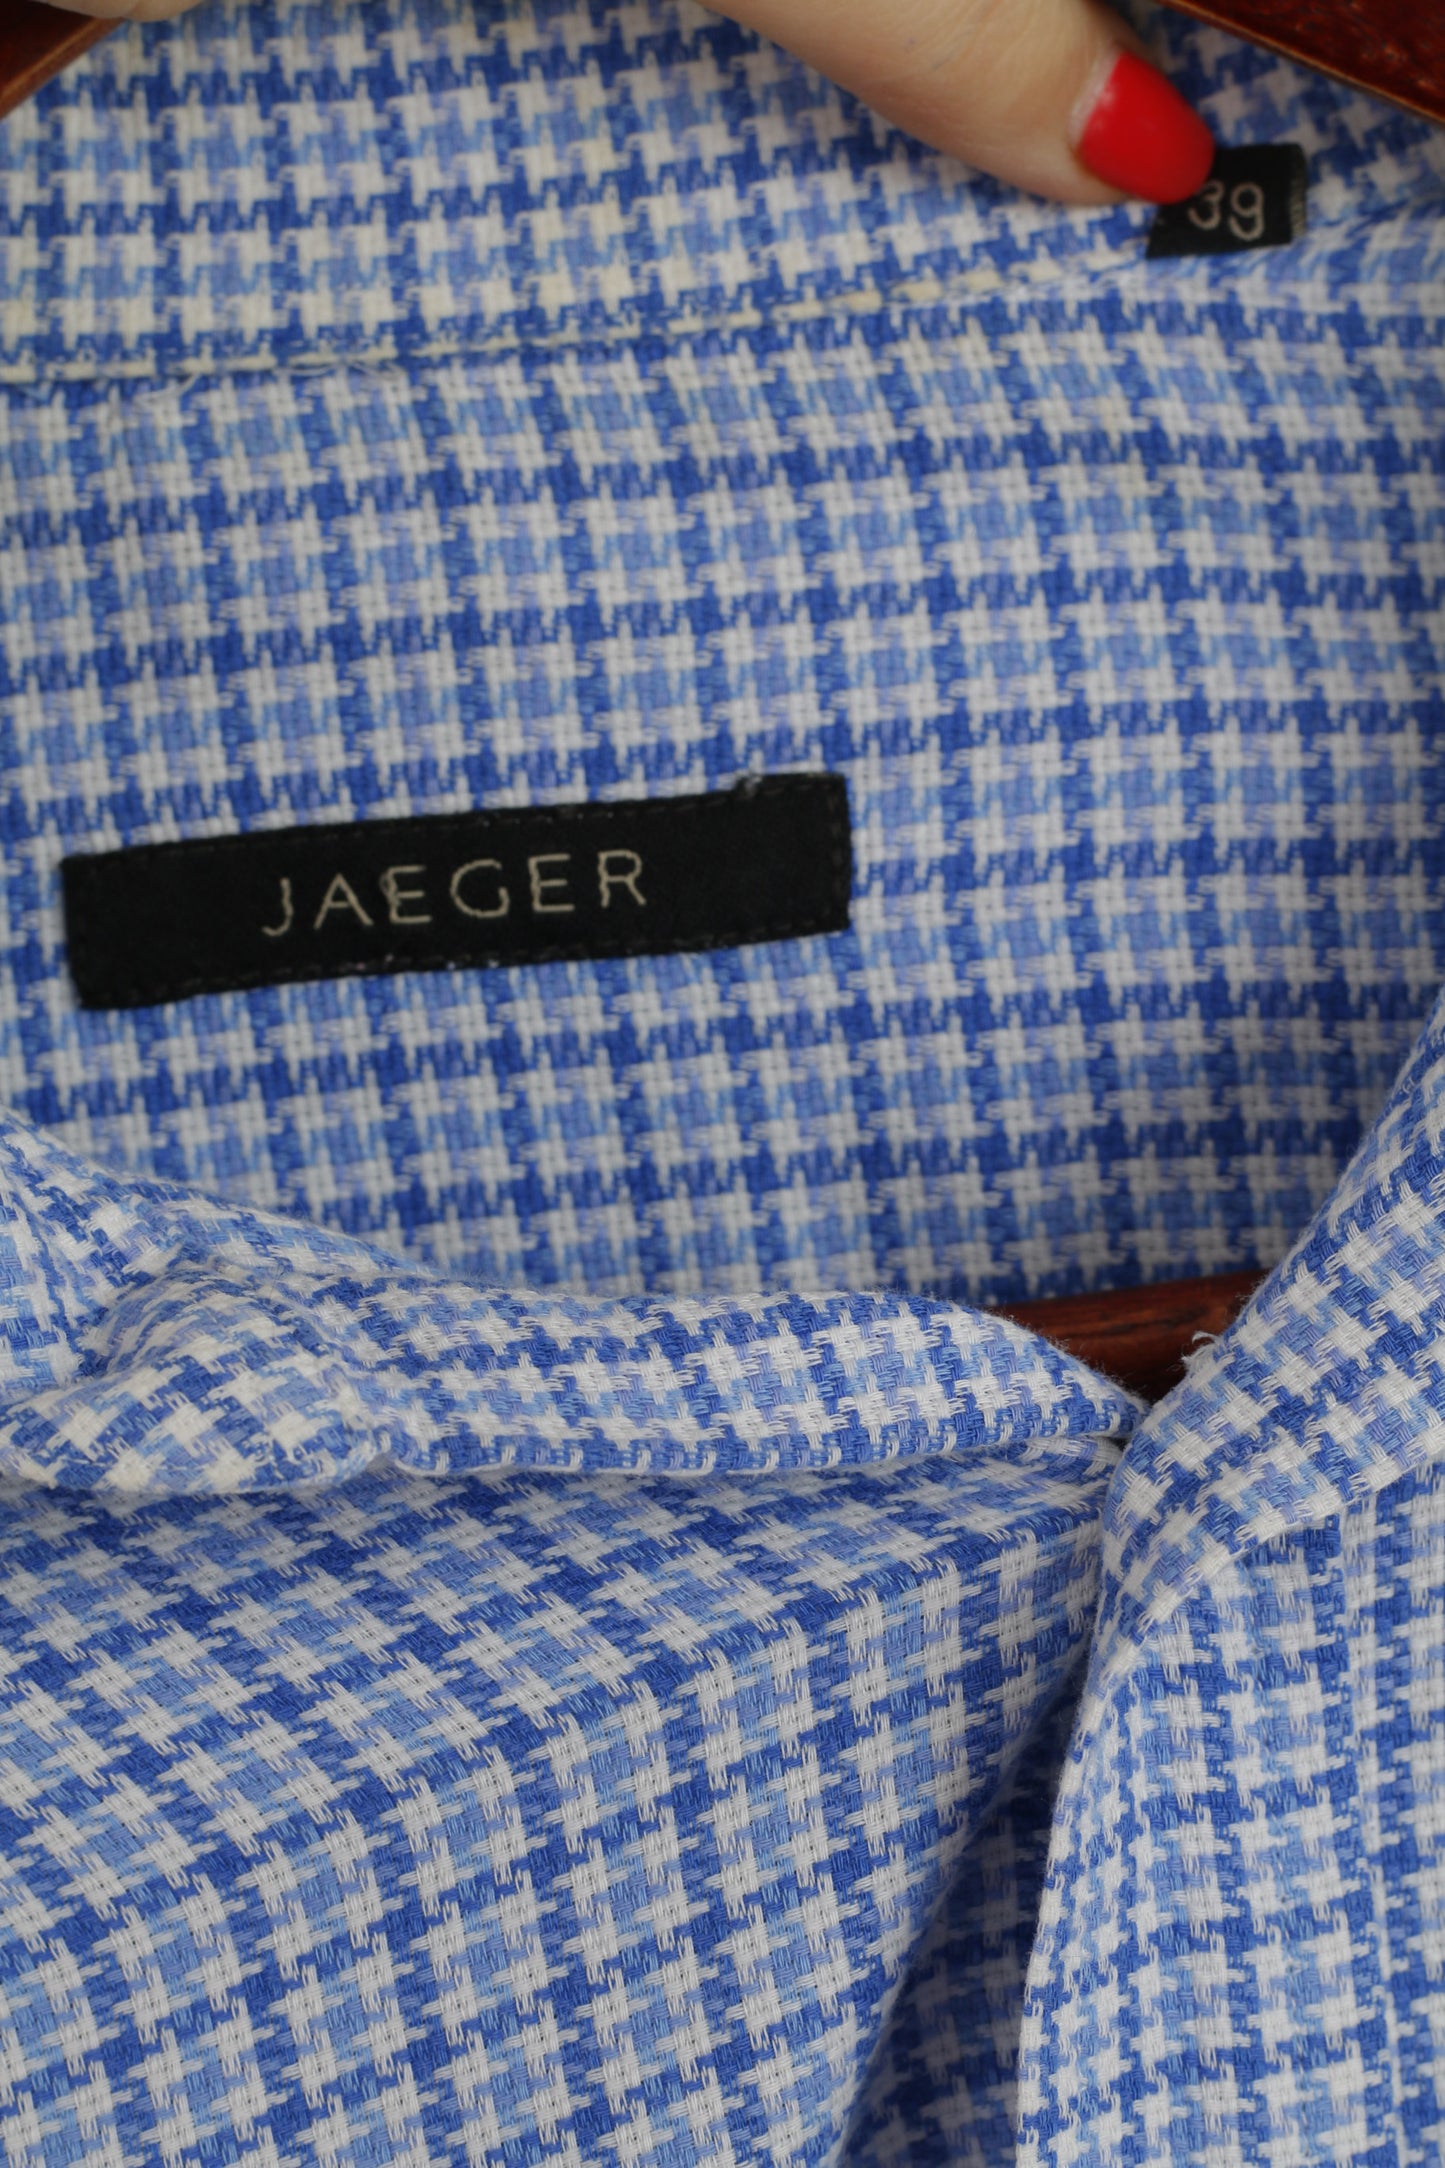 Jaeger Men 15.5 39 M Casual Shirt Blue Houndstooth Cotton Long Sleeve Top